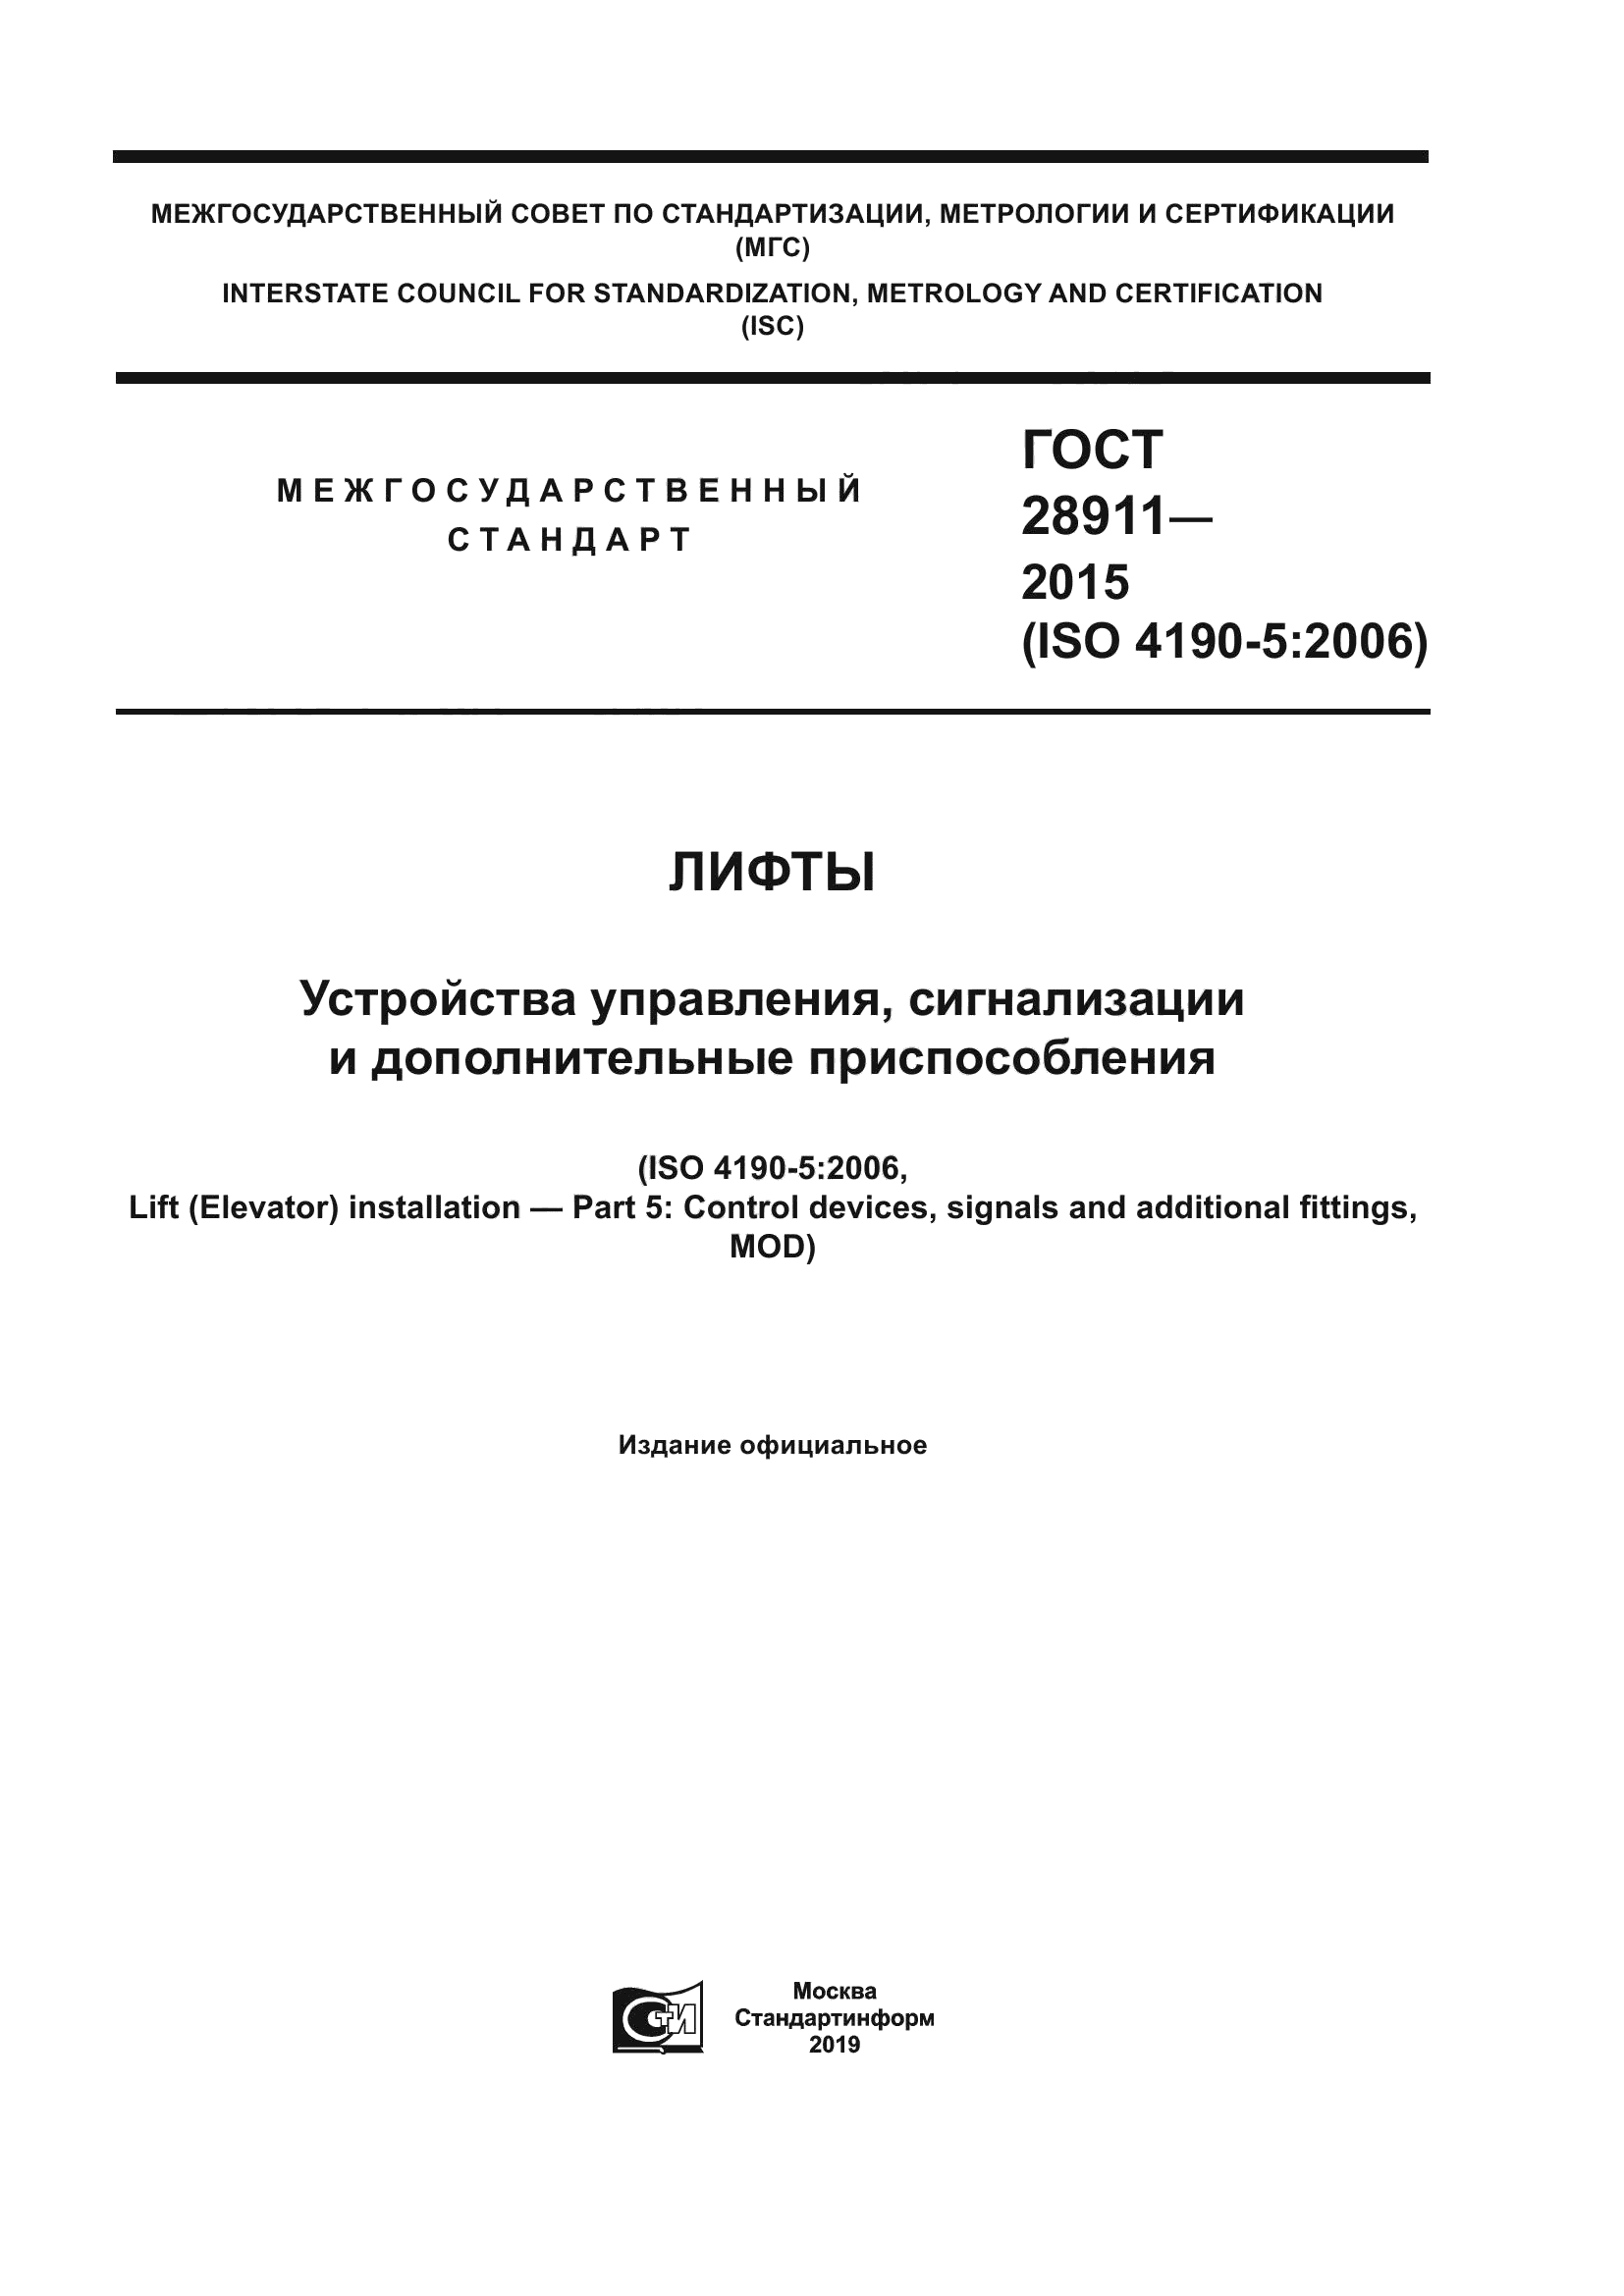 ГОСТ 28911-2015